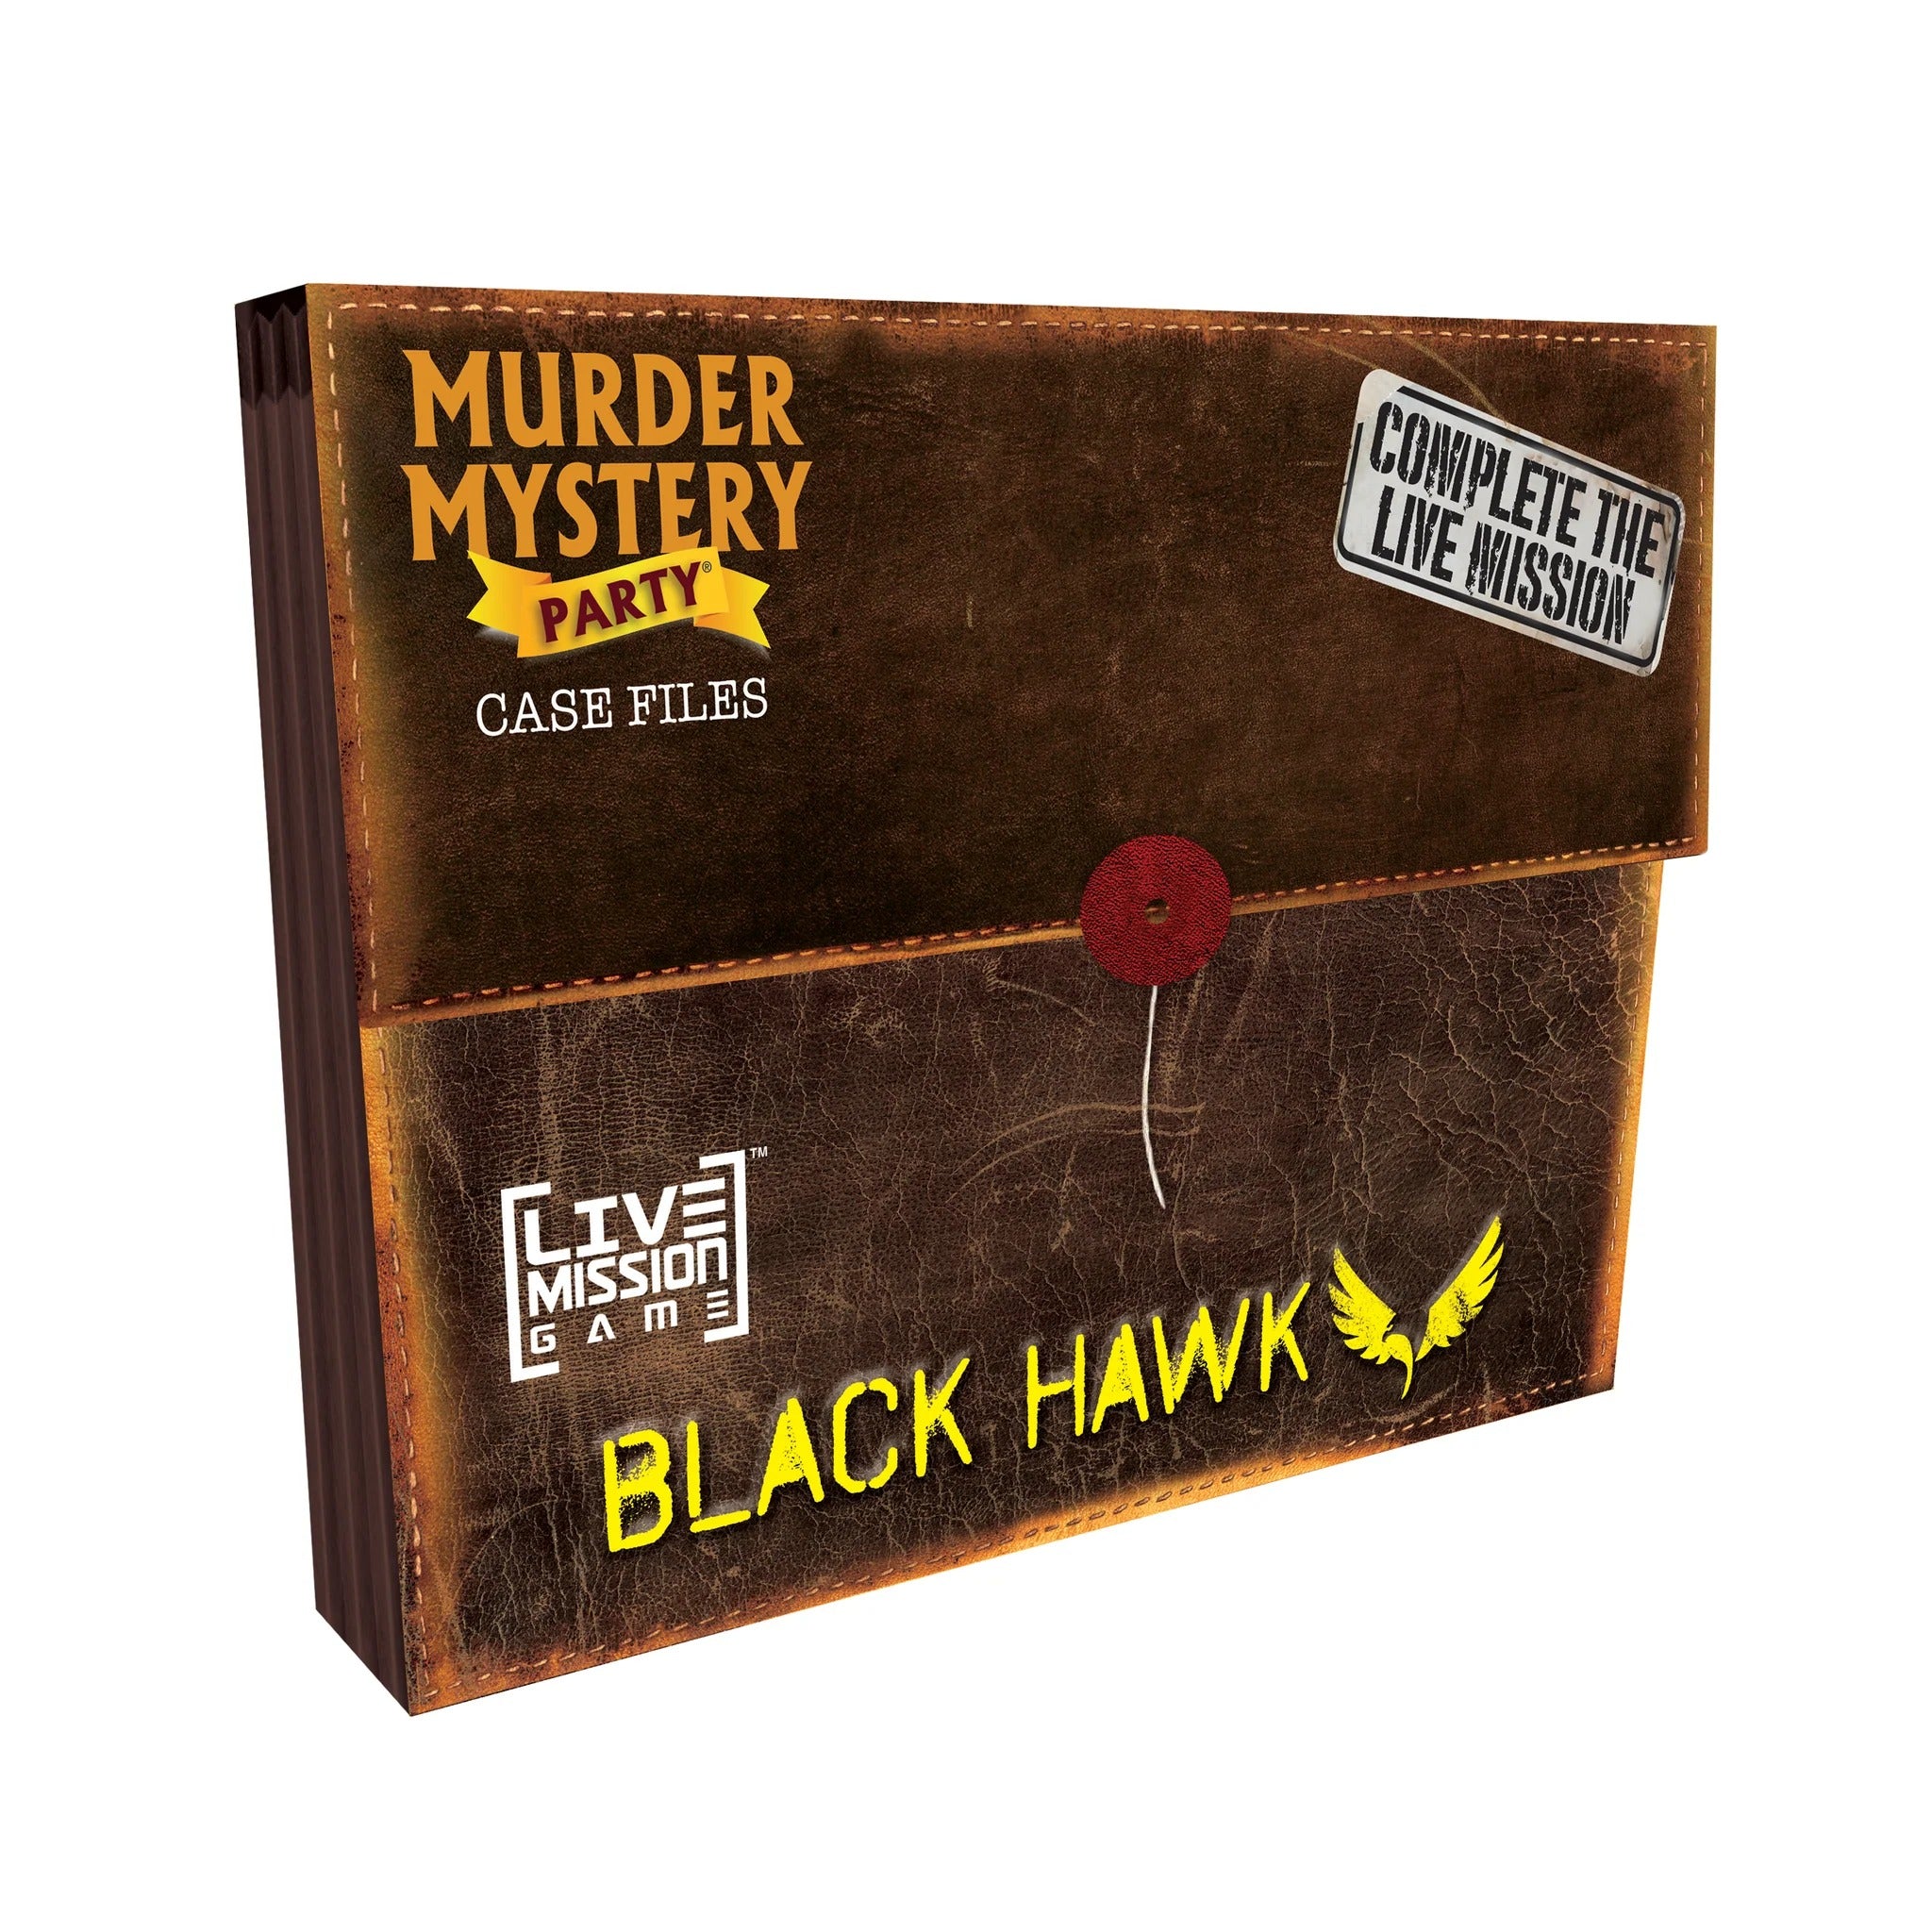 MURDER MYSTERY PARTY - BLACK HAWK